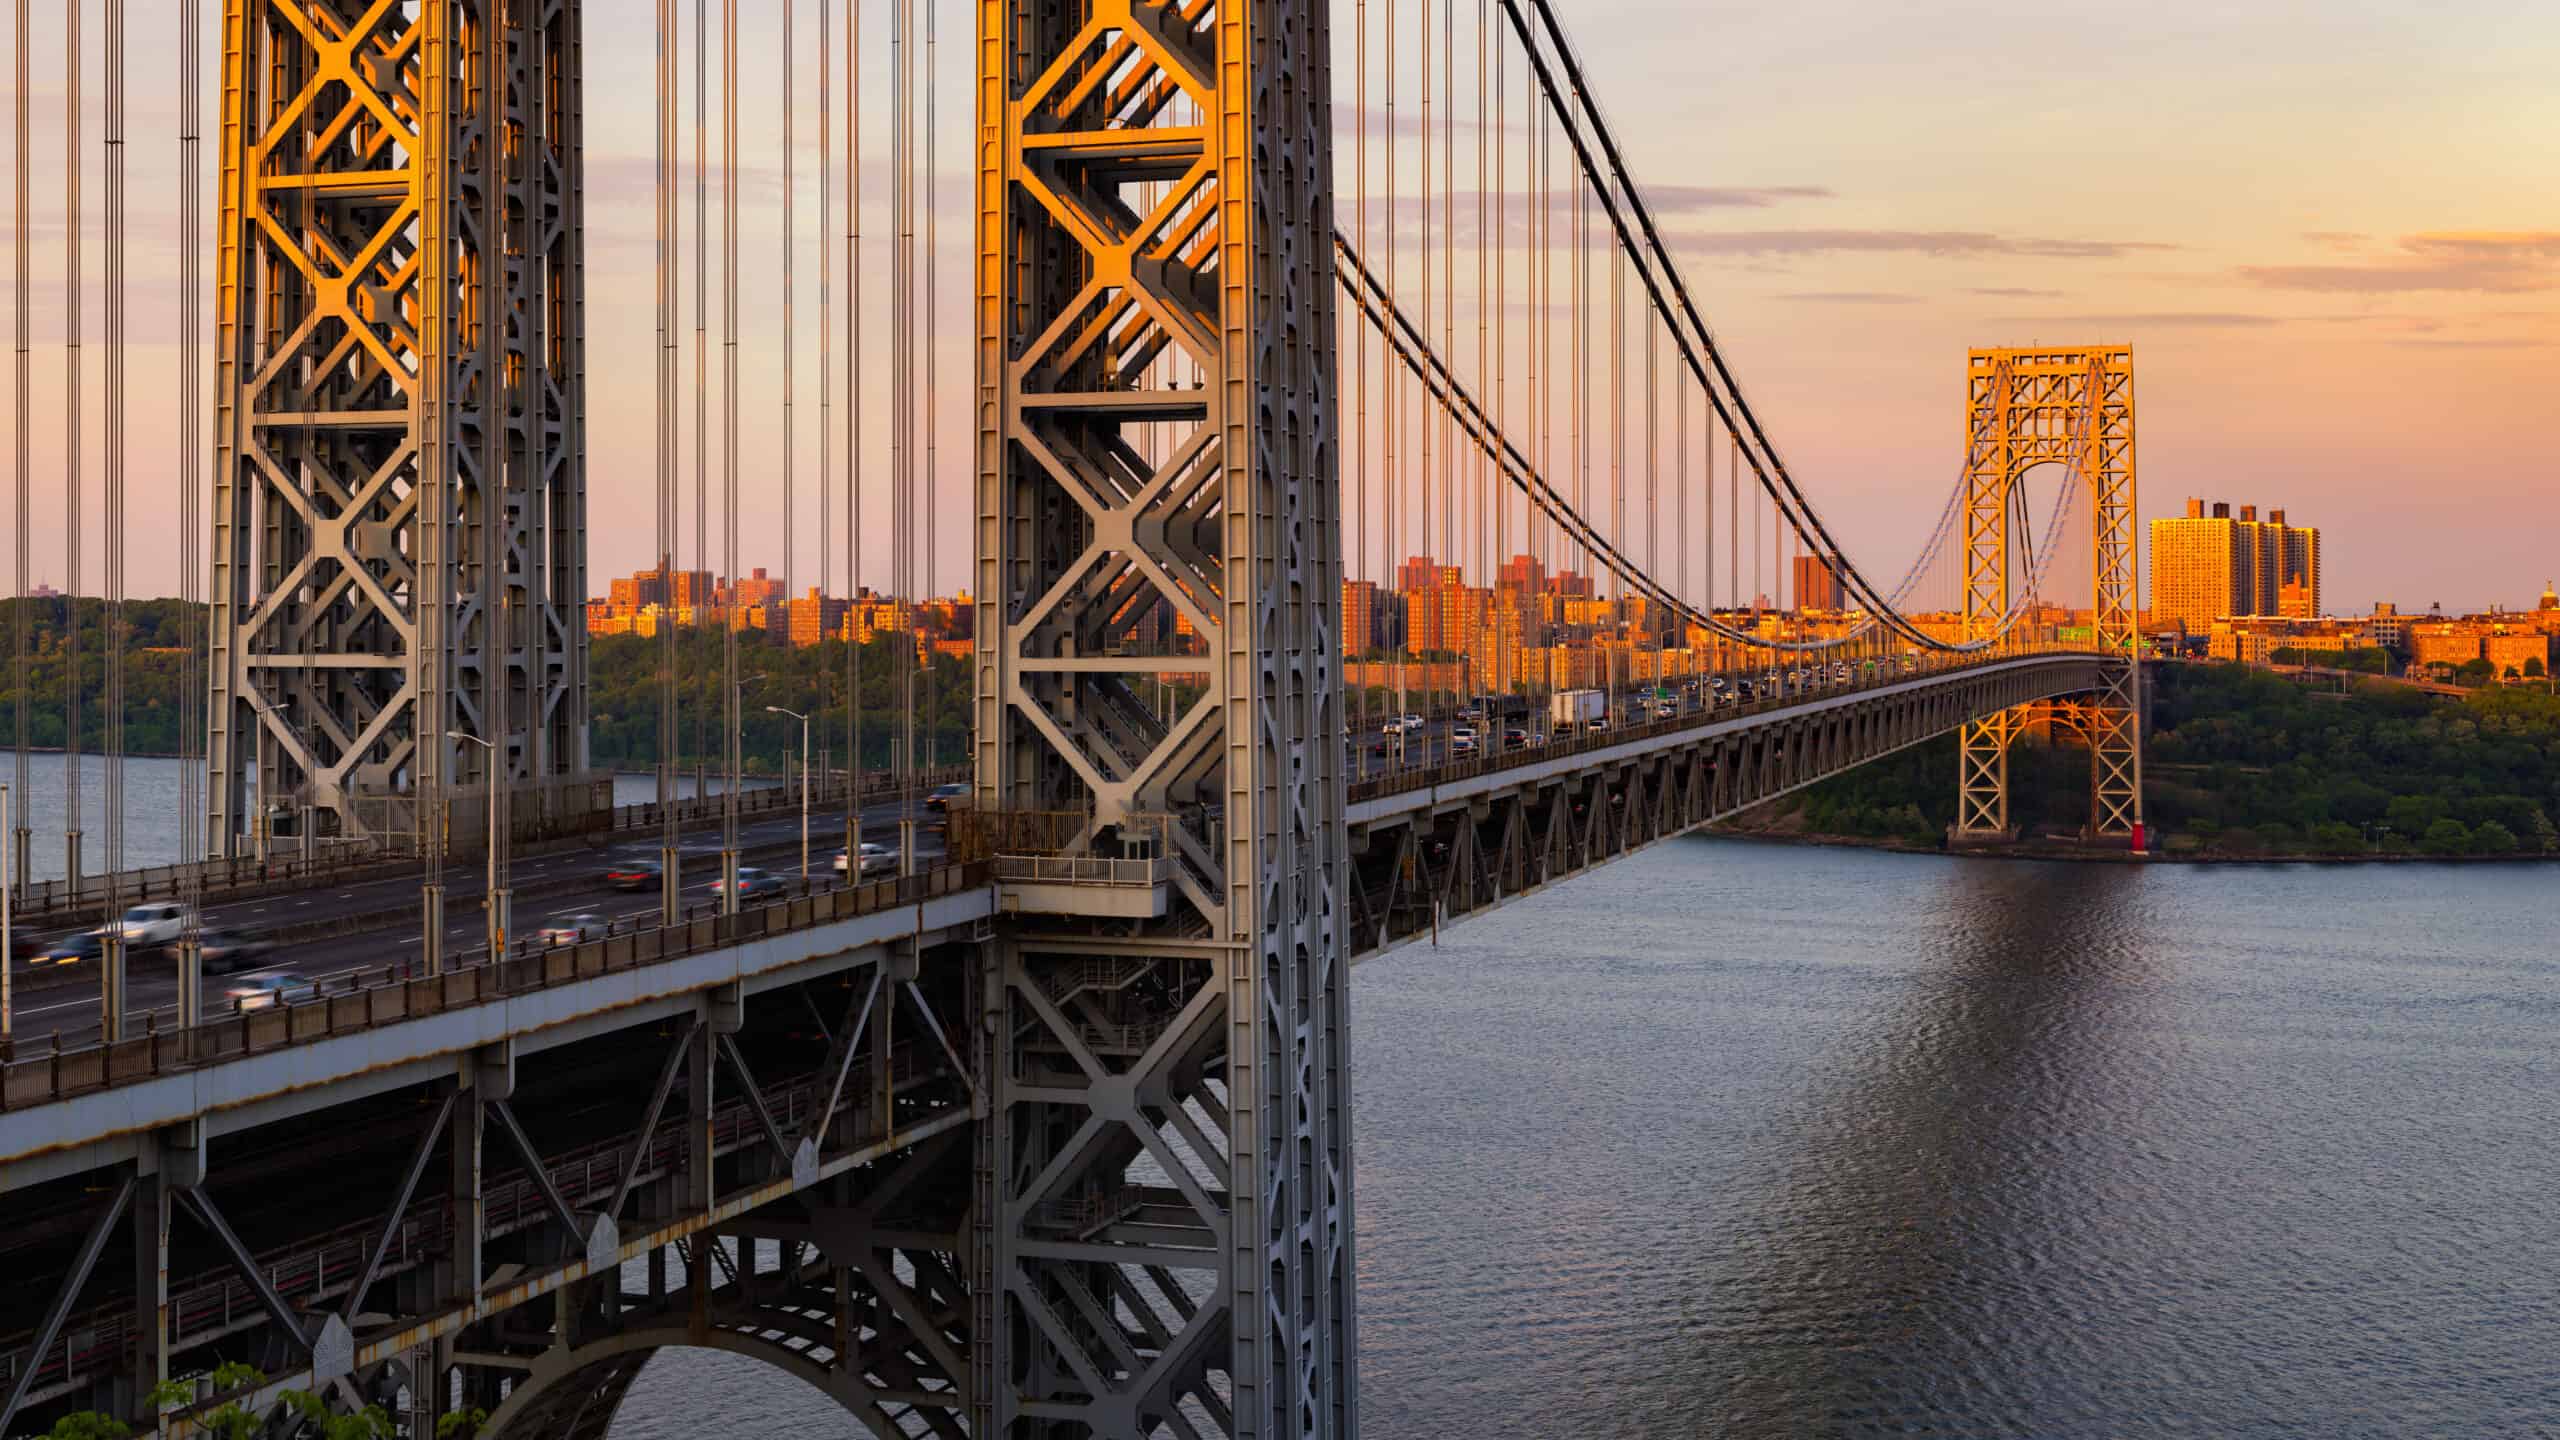 The George Washington Bridge across the Hudson River at sunset. New York City, USA